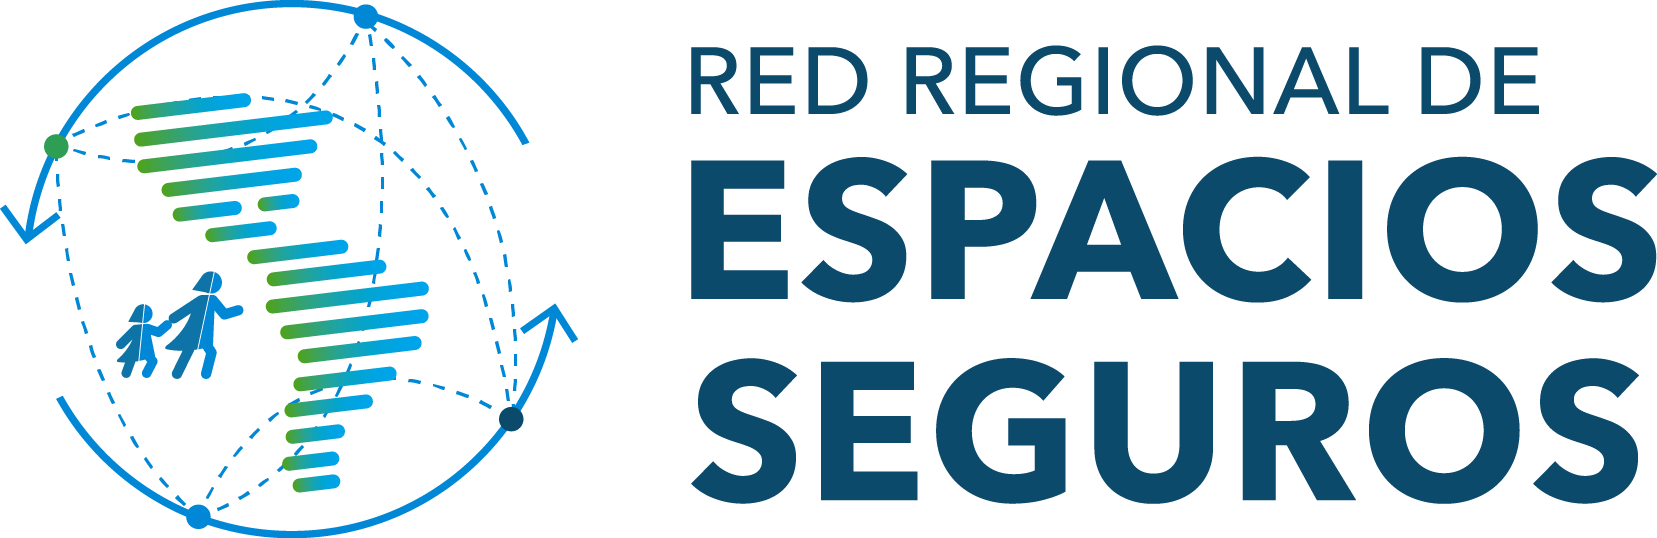 RSSN Americas logo